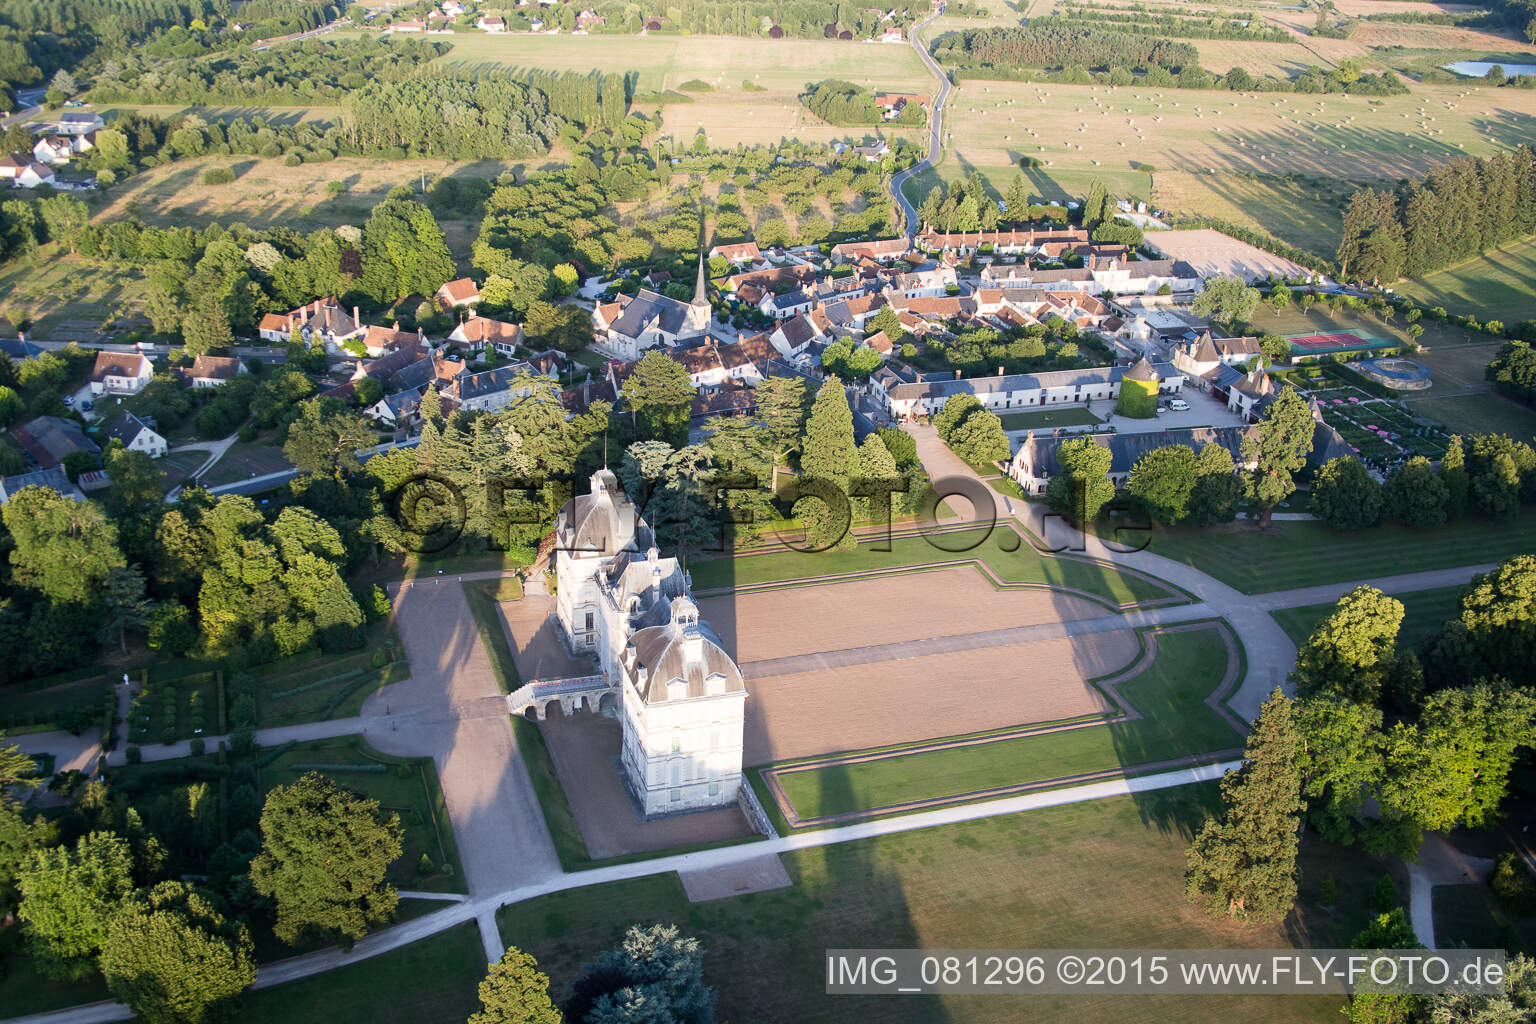 Castle Cheverny - Chateau de Cheverny in Cheverny in Centre-Val de Loire, France viewn from the air